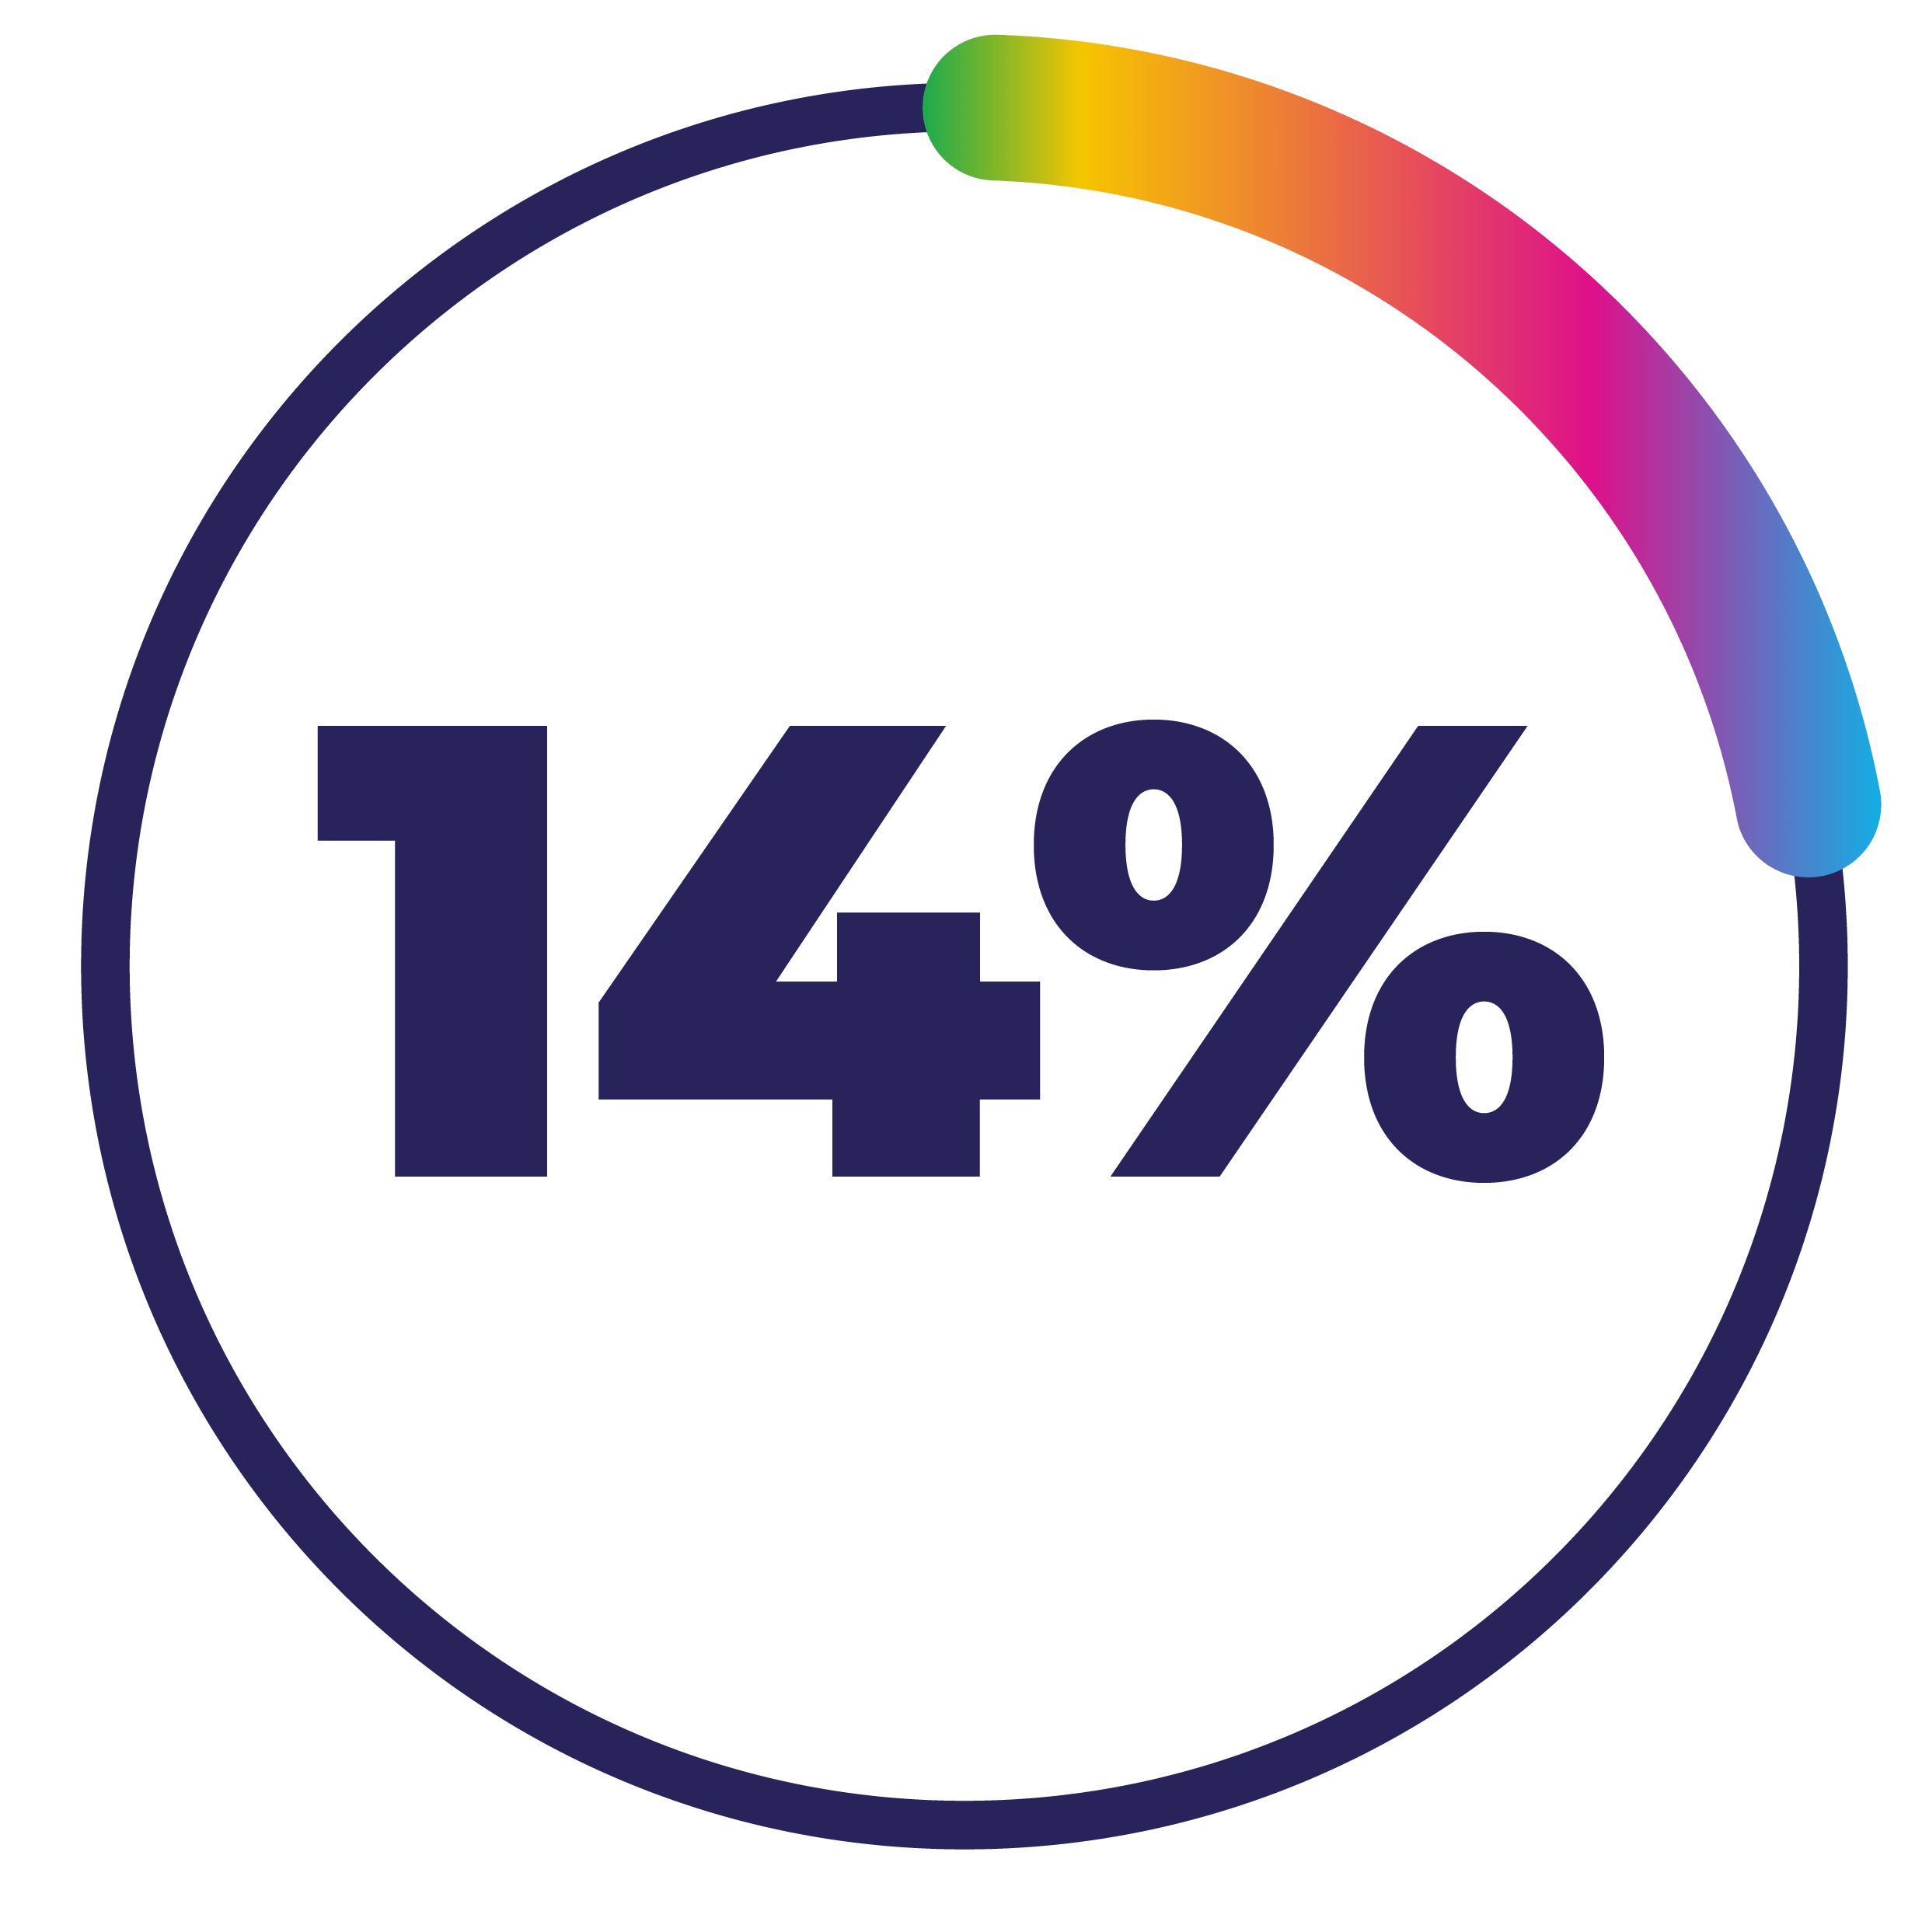 14% in a pie chart